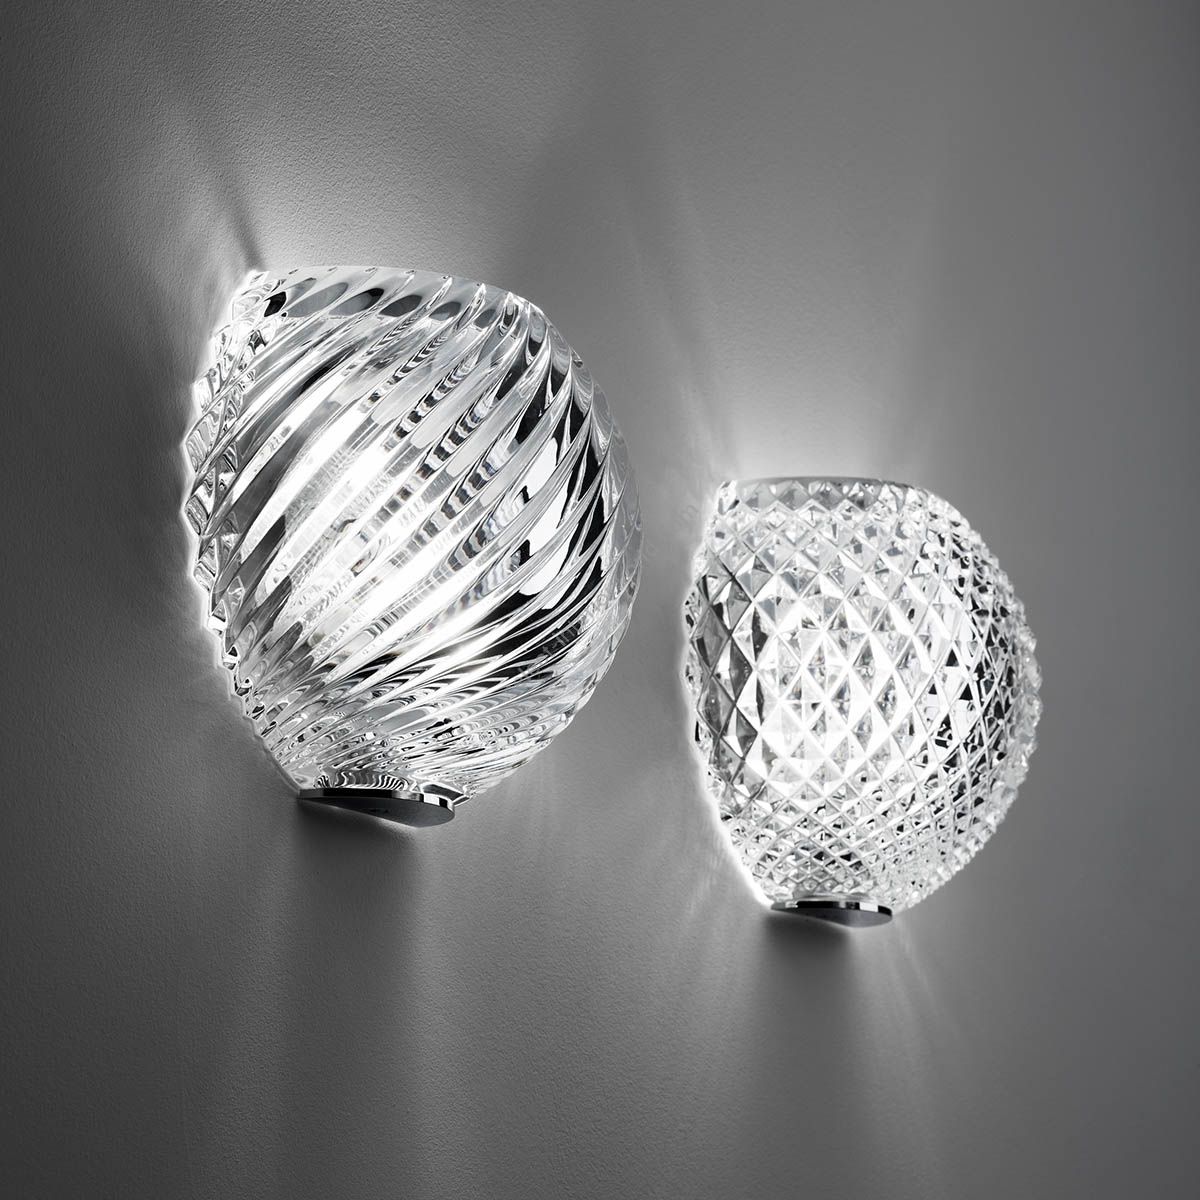 Fabbian DiamondSwirl D82 D99/98 Crystal Glass Wall Light